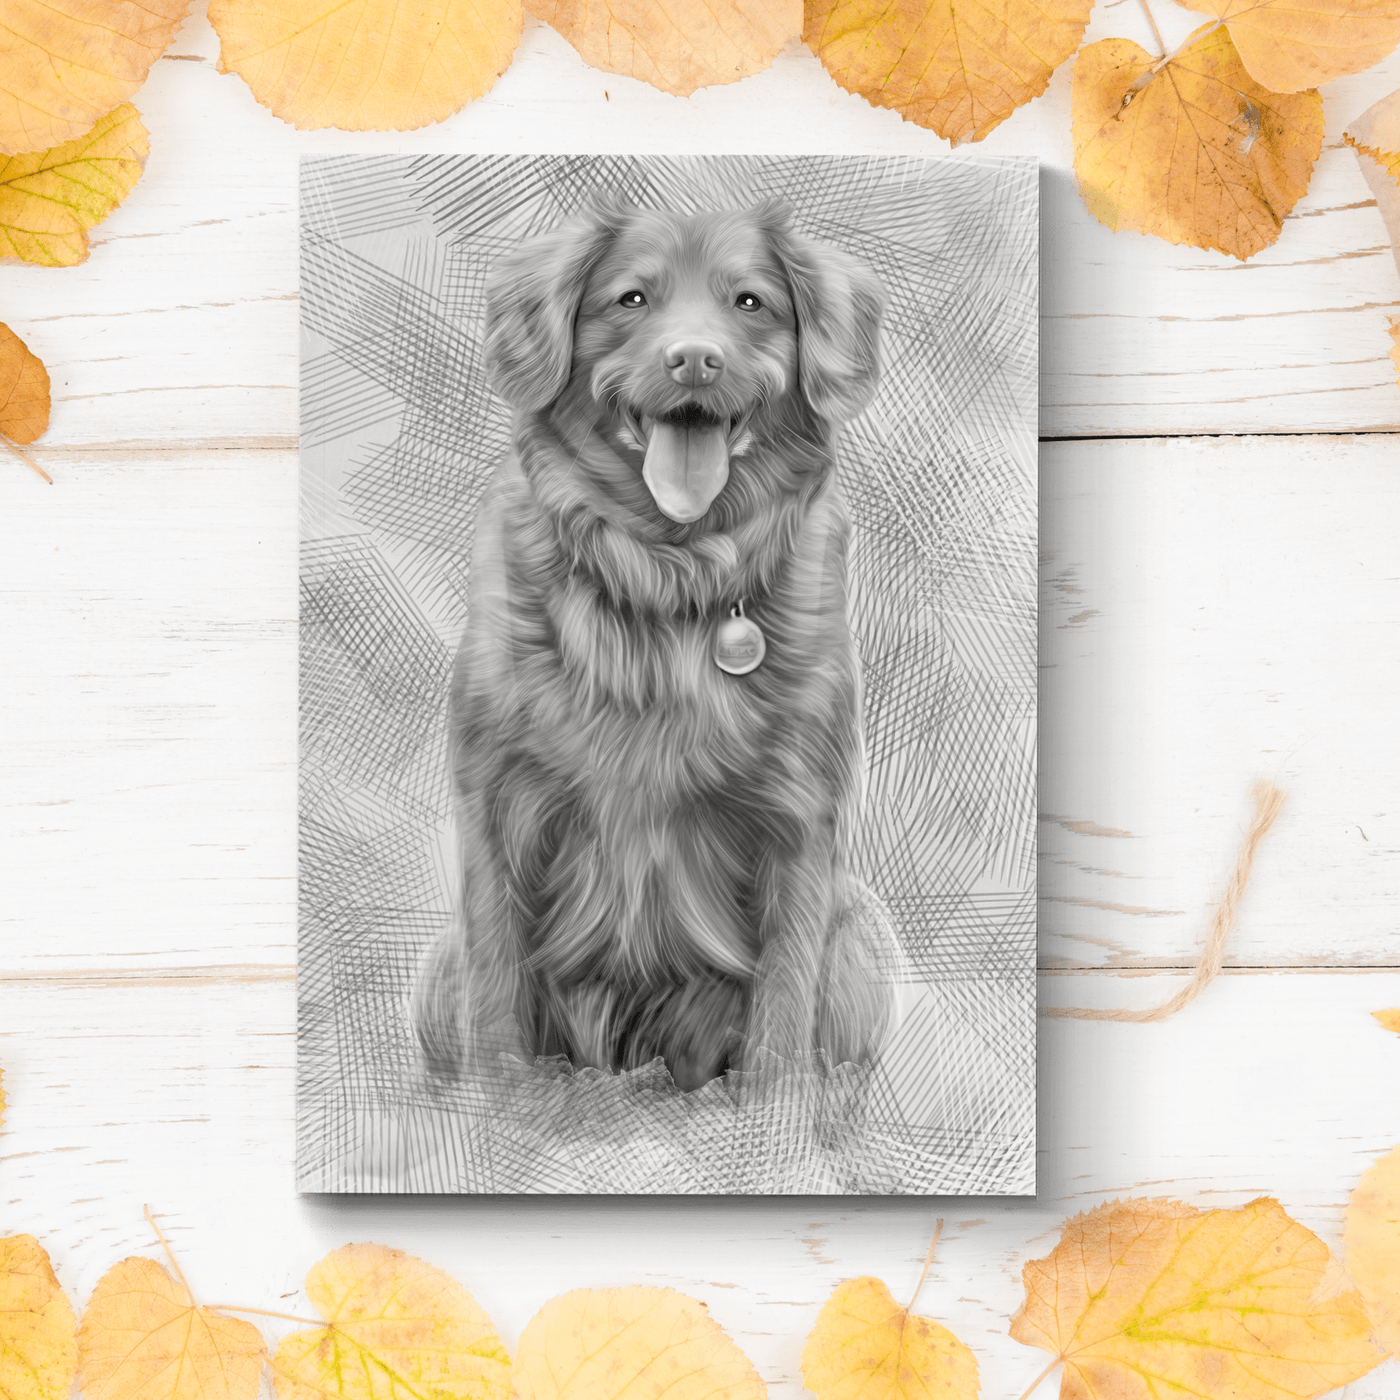 pet pencil sketch of an adorable dog